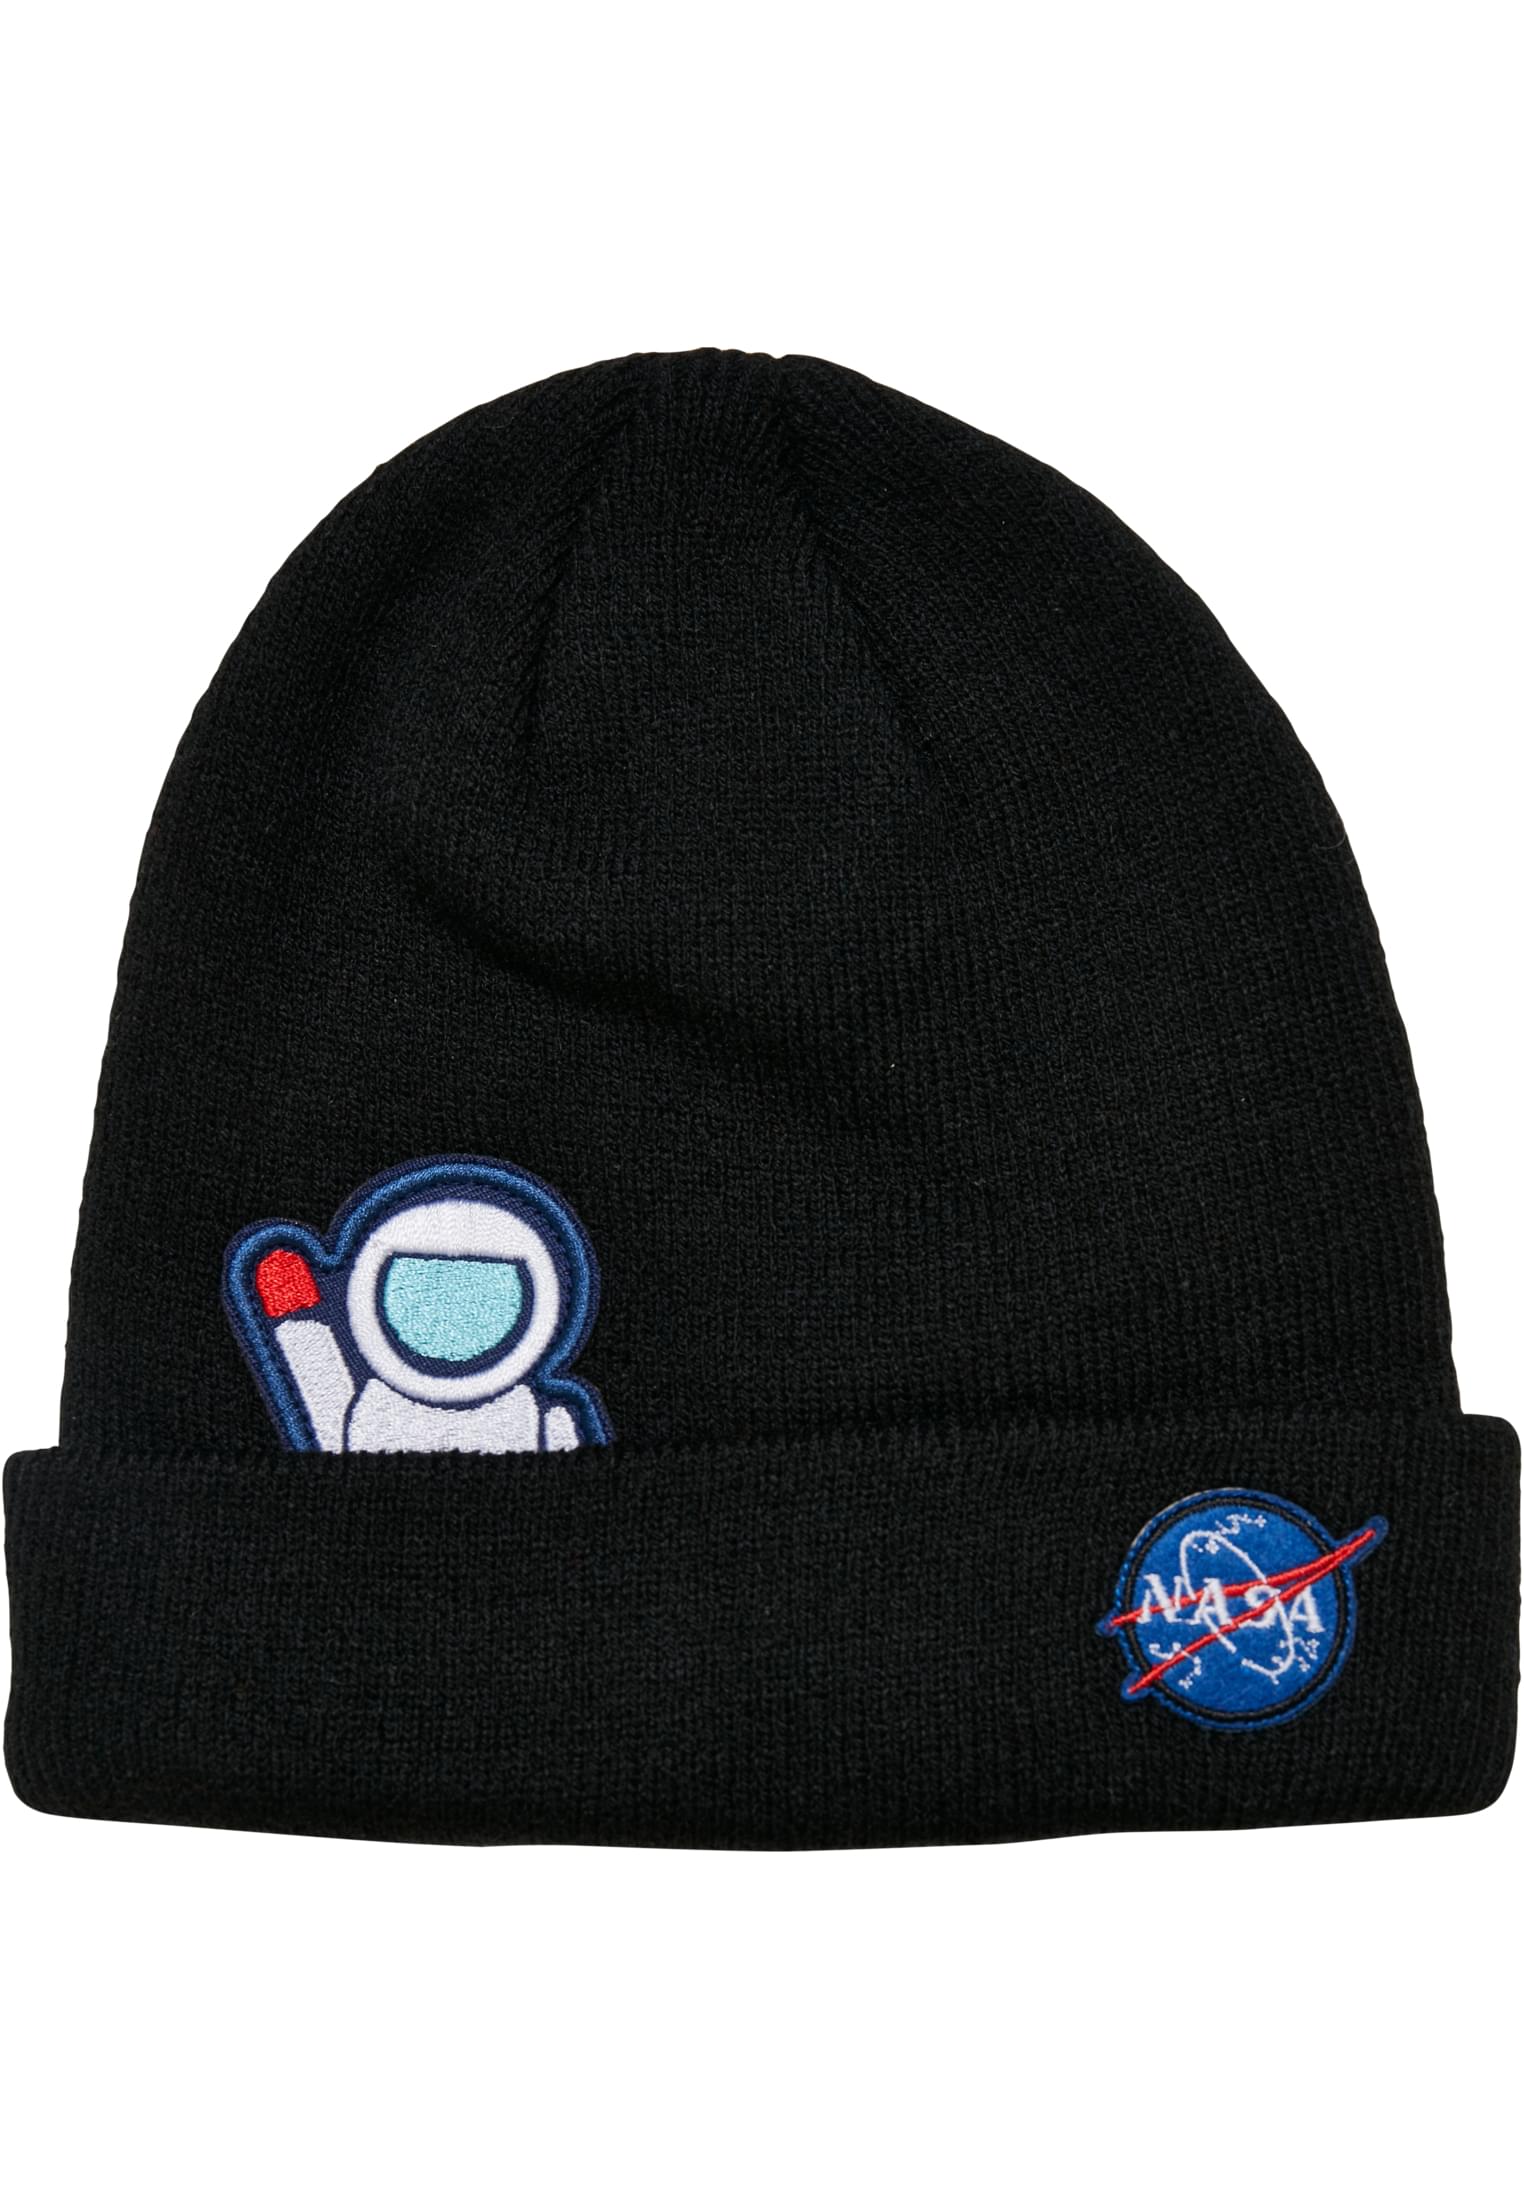 Children's Hat NASA Embroidery Beanie Black